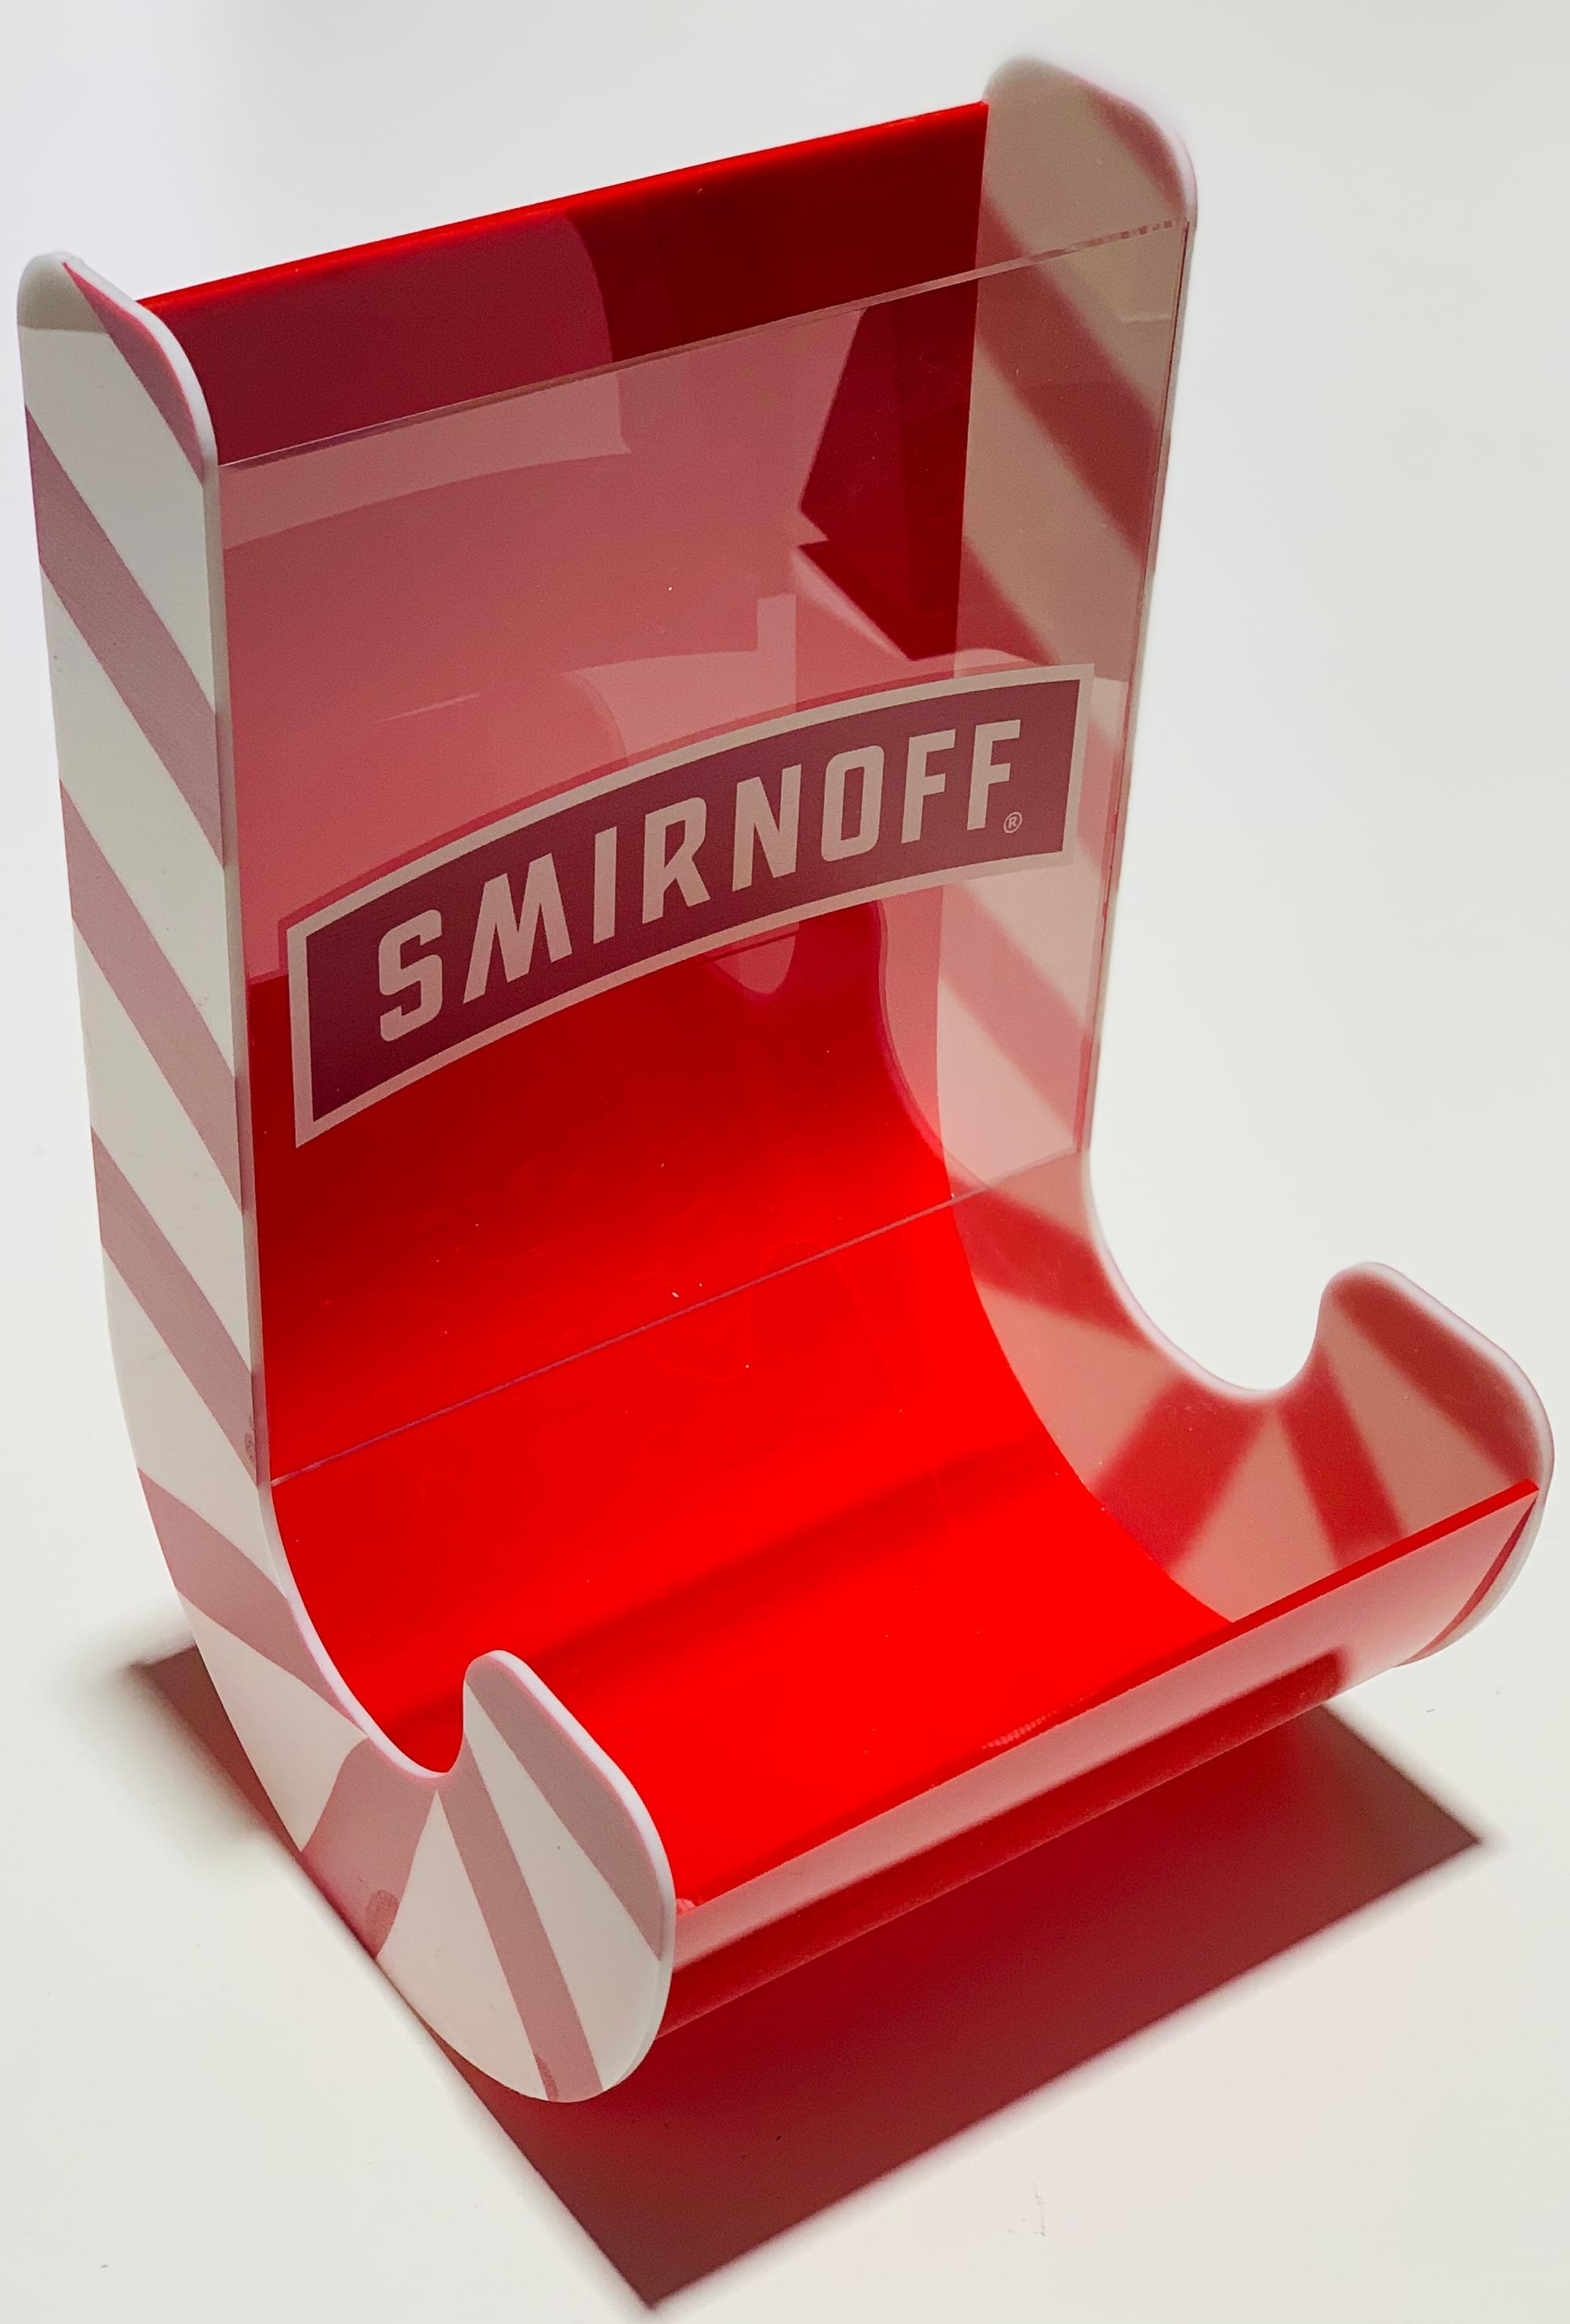 Custom Acrylic Display for Smirnoff